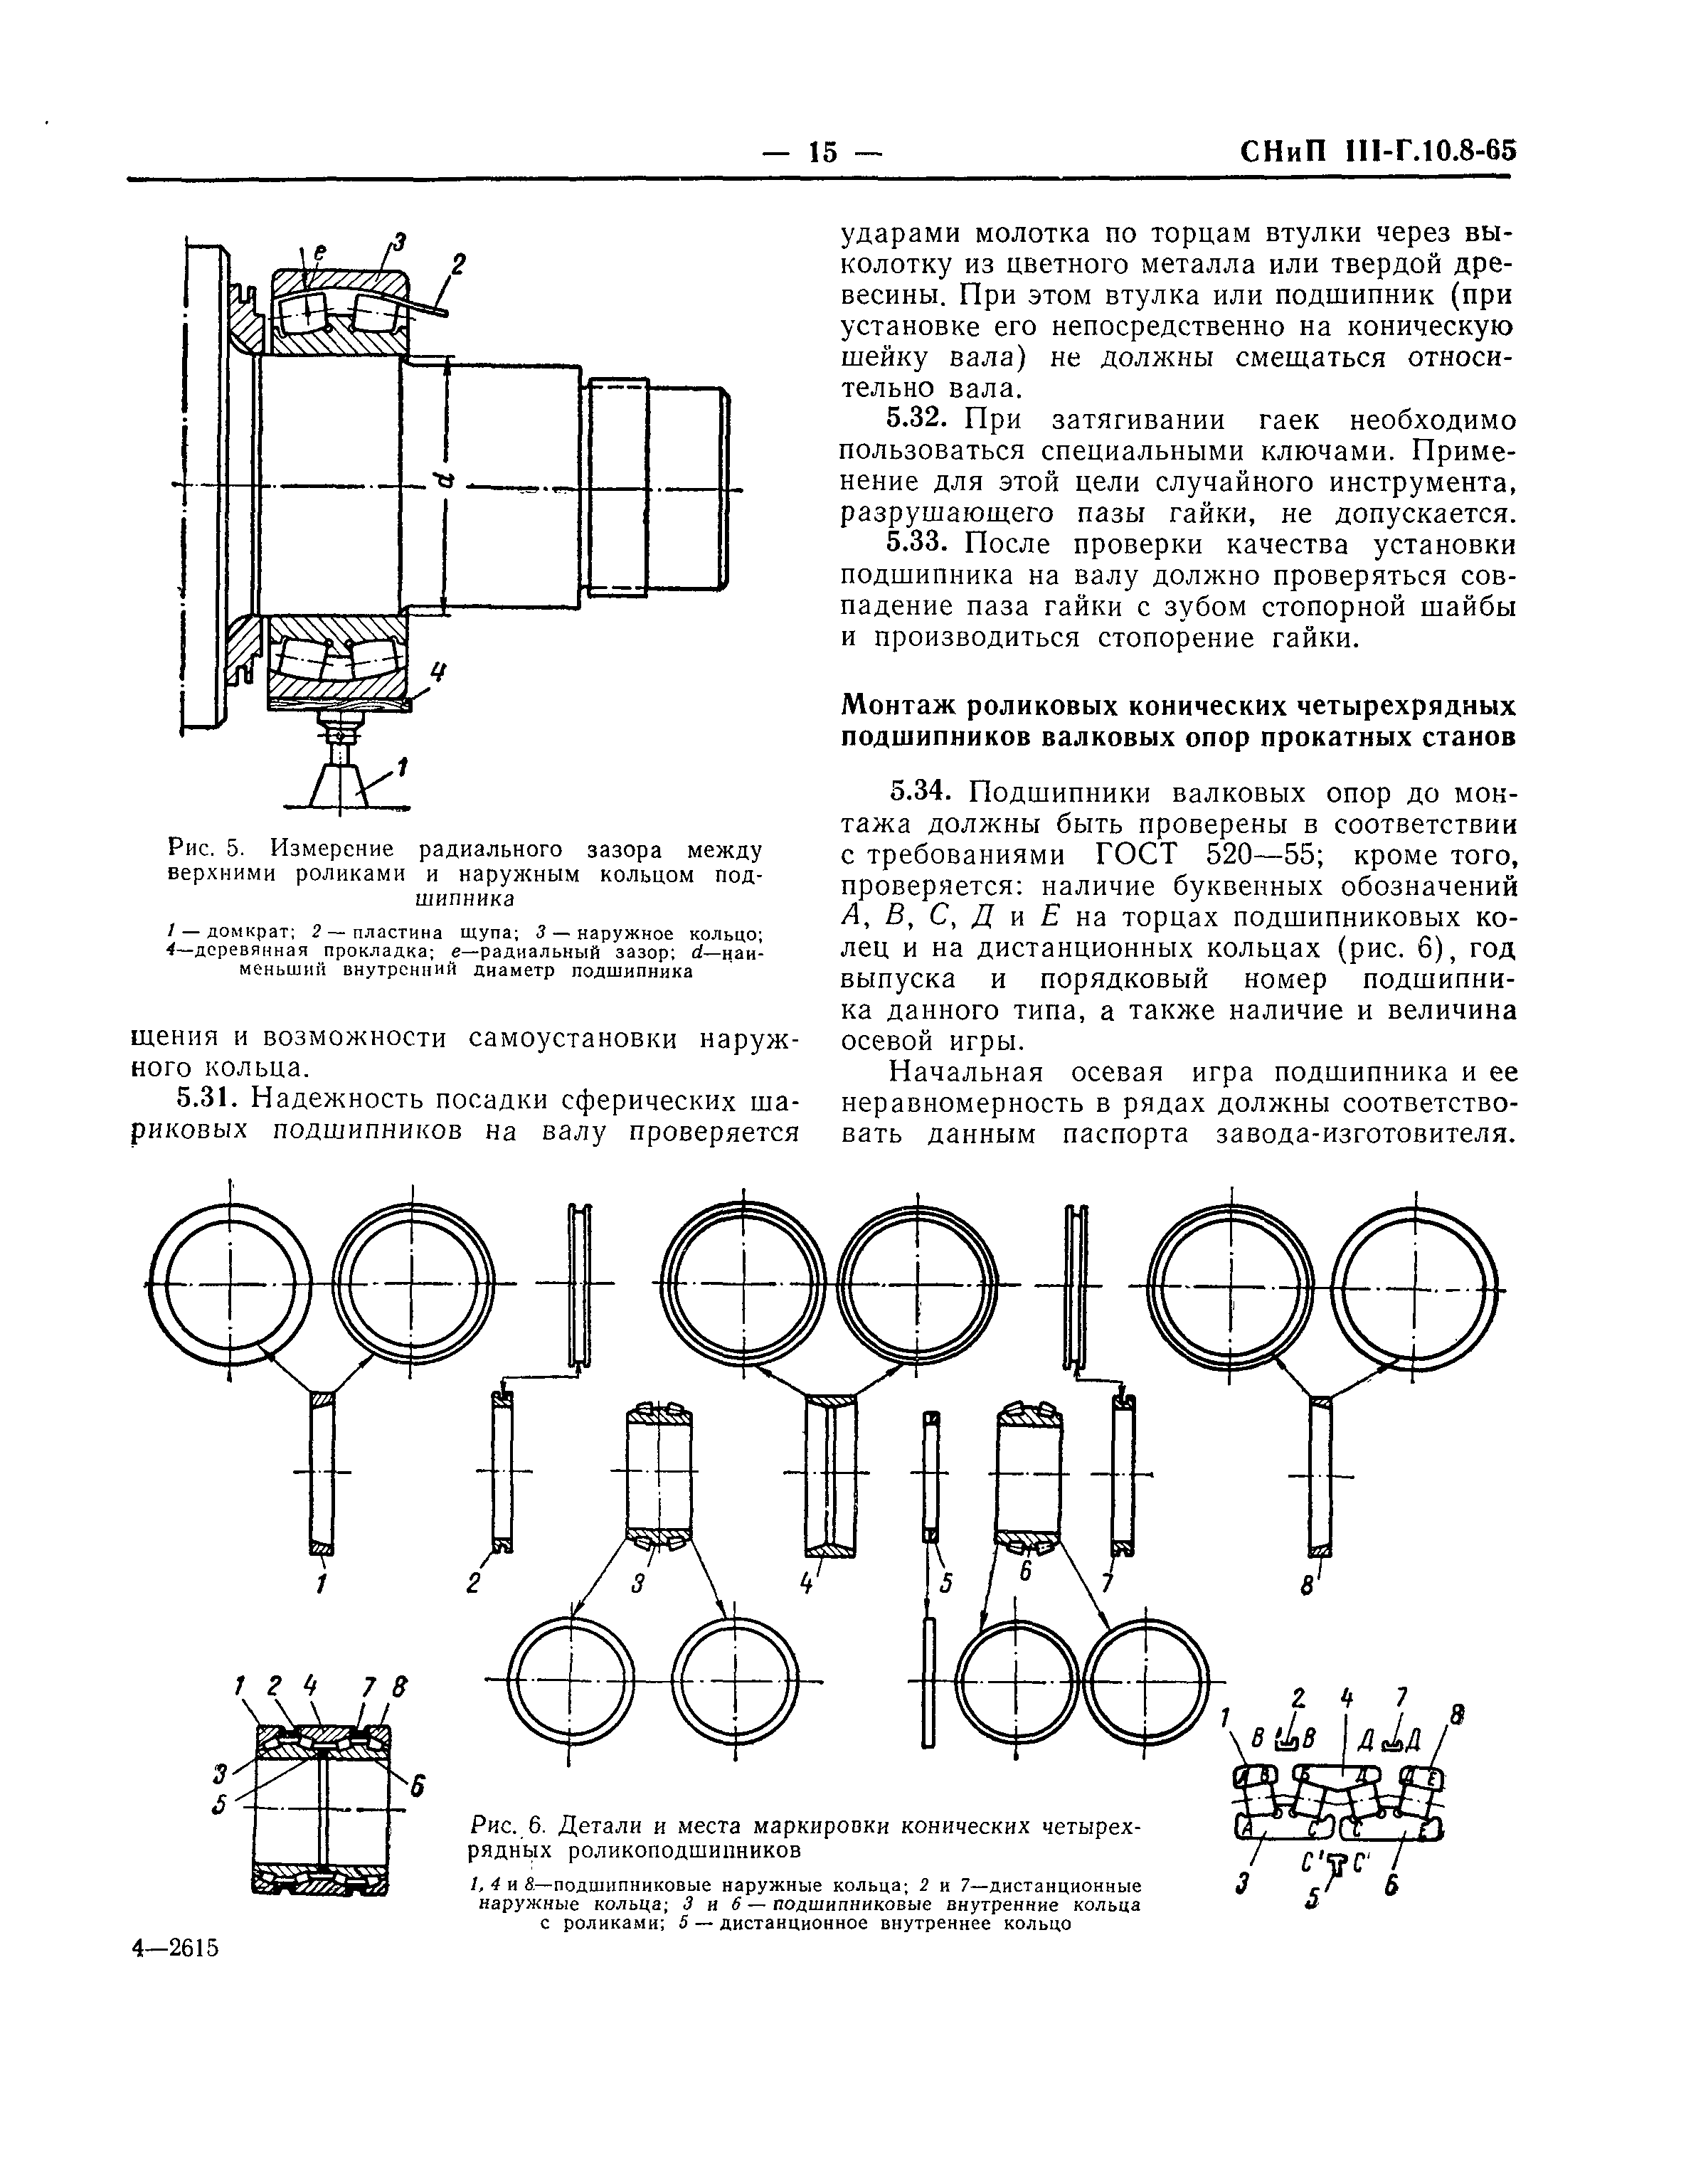 СНиП III-Г.10.8-65